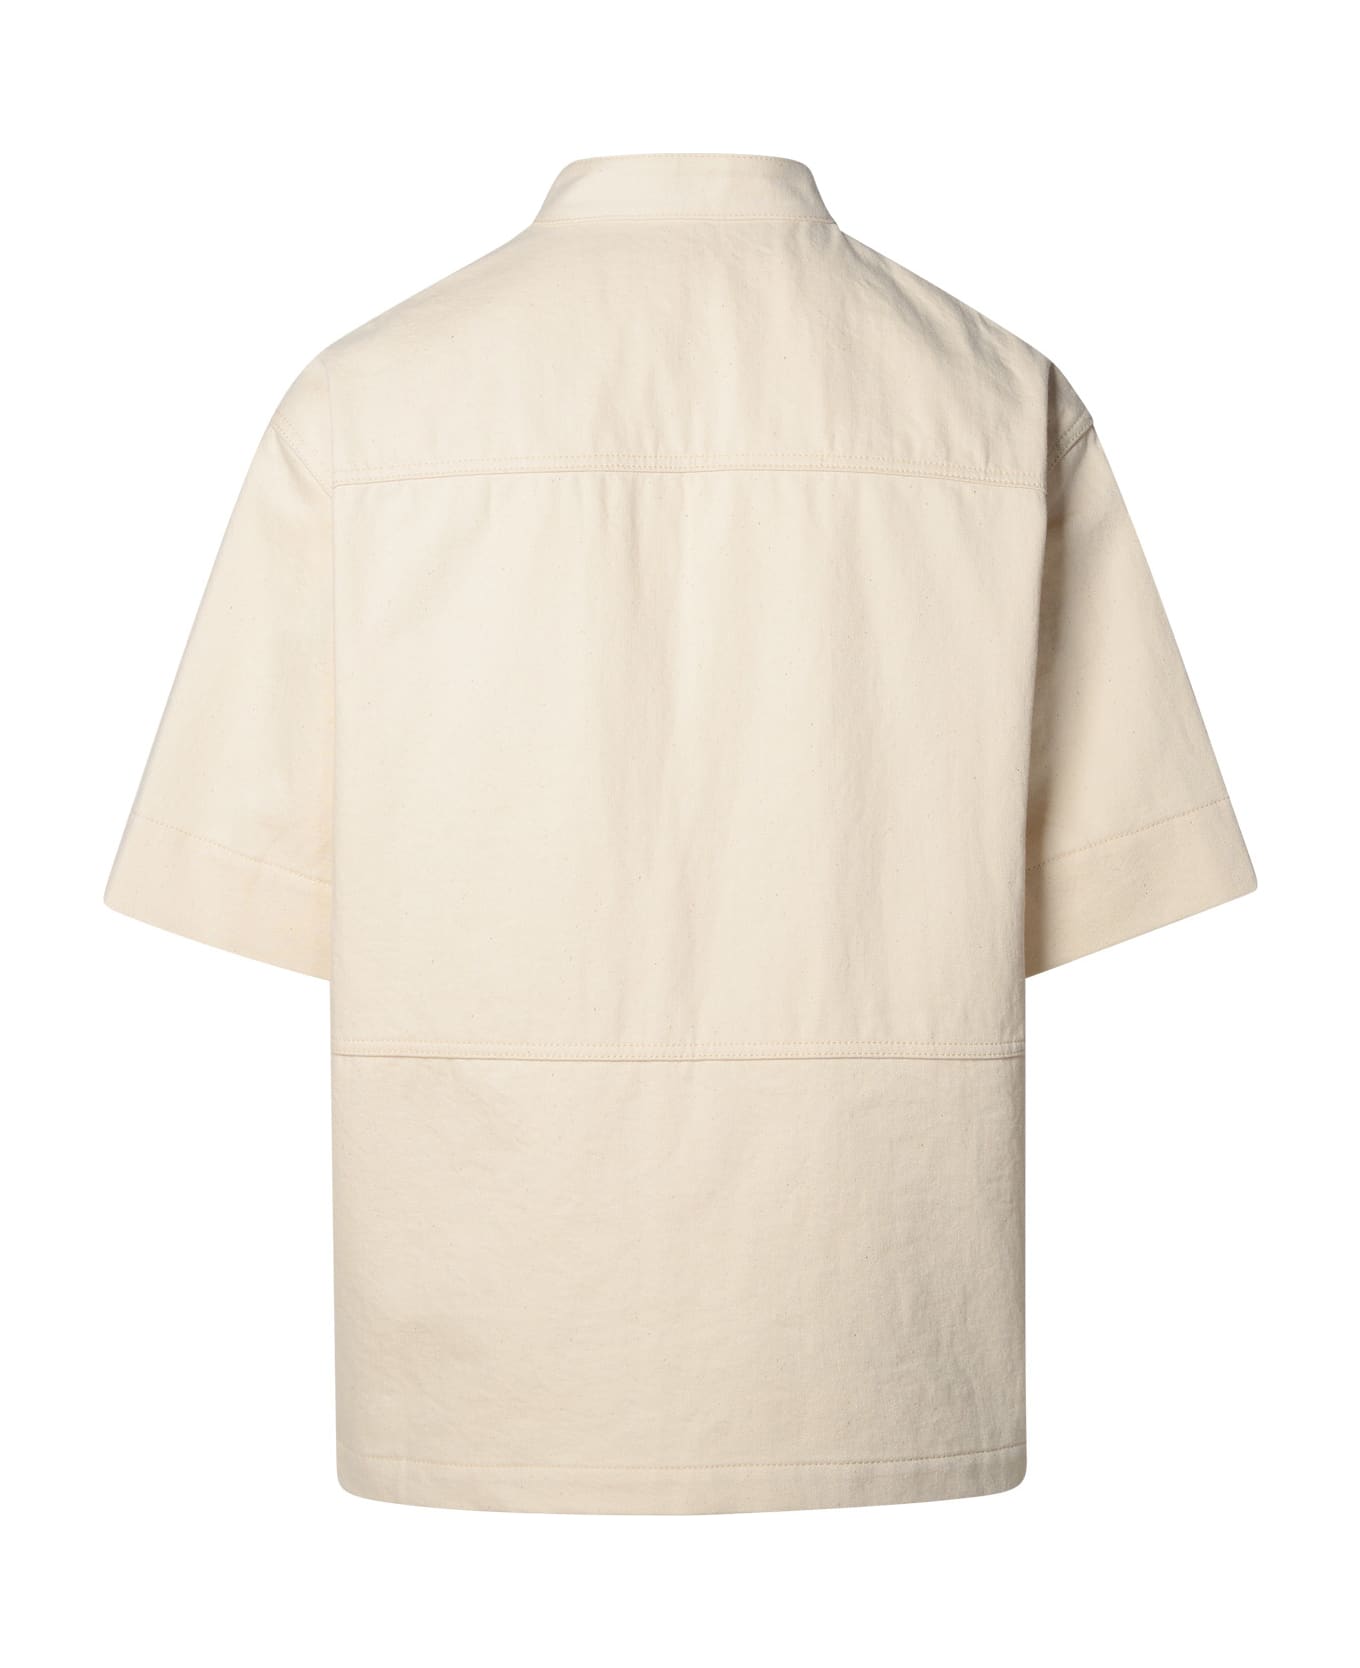 Jil Sander Ivory Cotton Shirt - Ivory シャツ